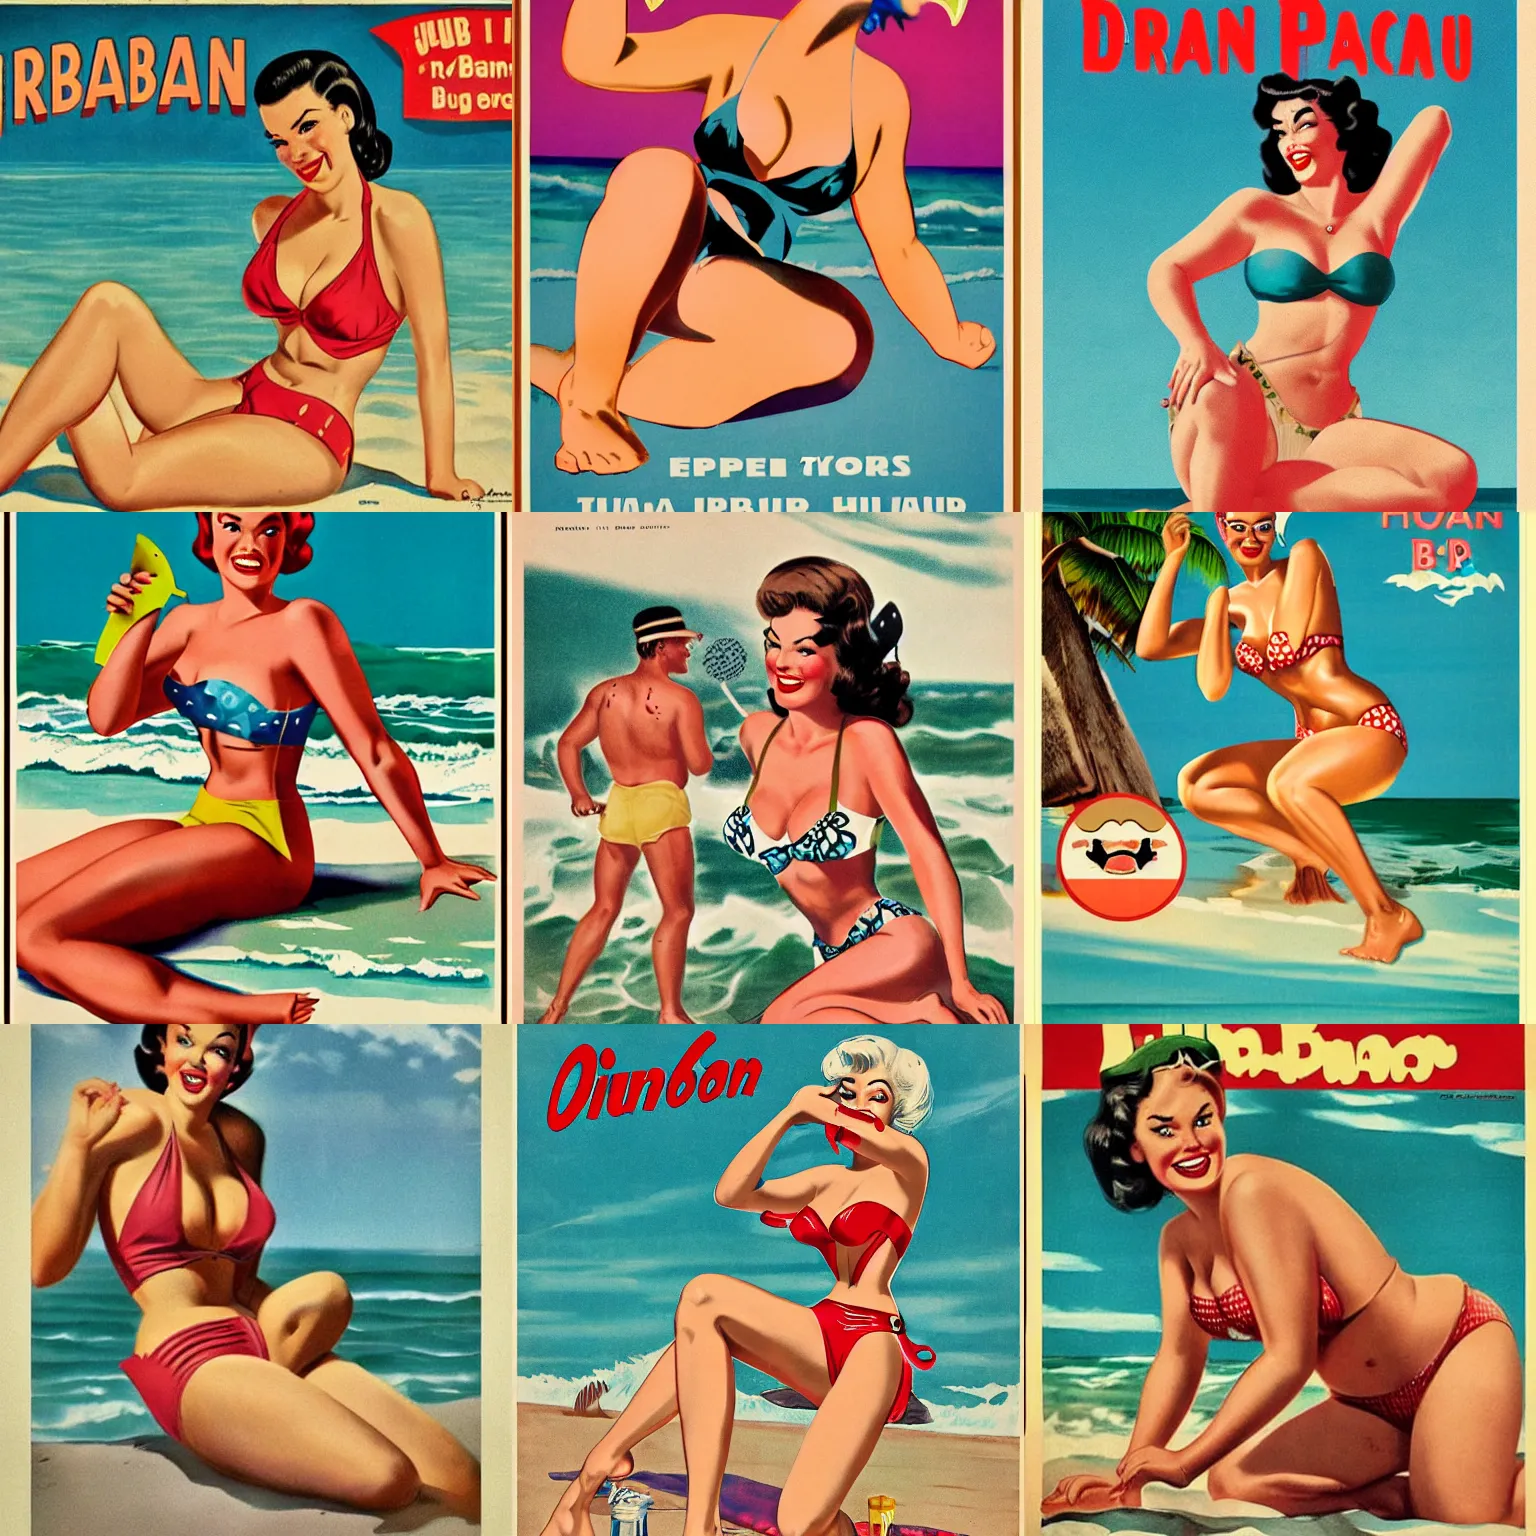 Prompt: Human-dinosaur hybrid wearing a bikini at the beach, pin up style poster, 1950s advertisement